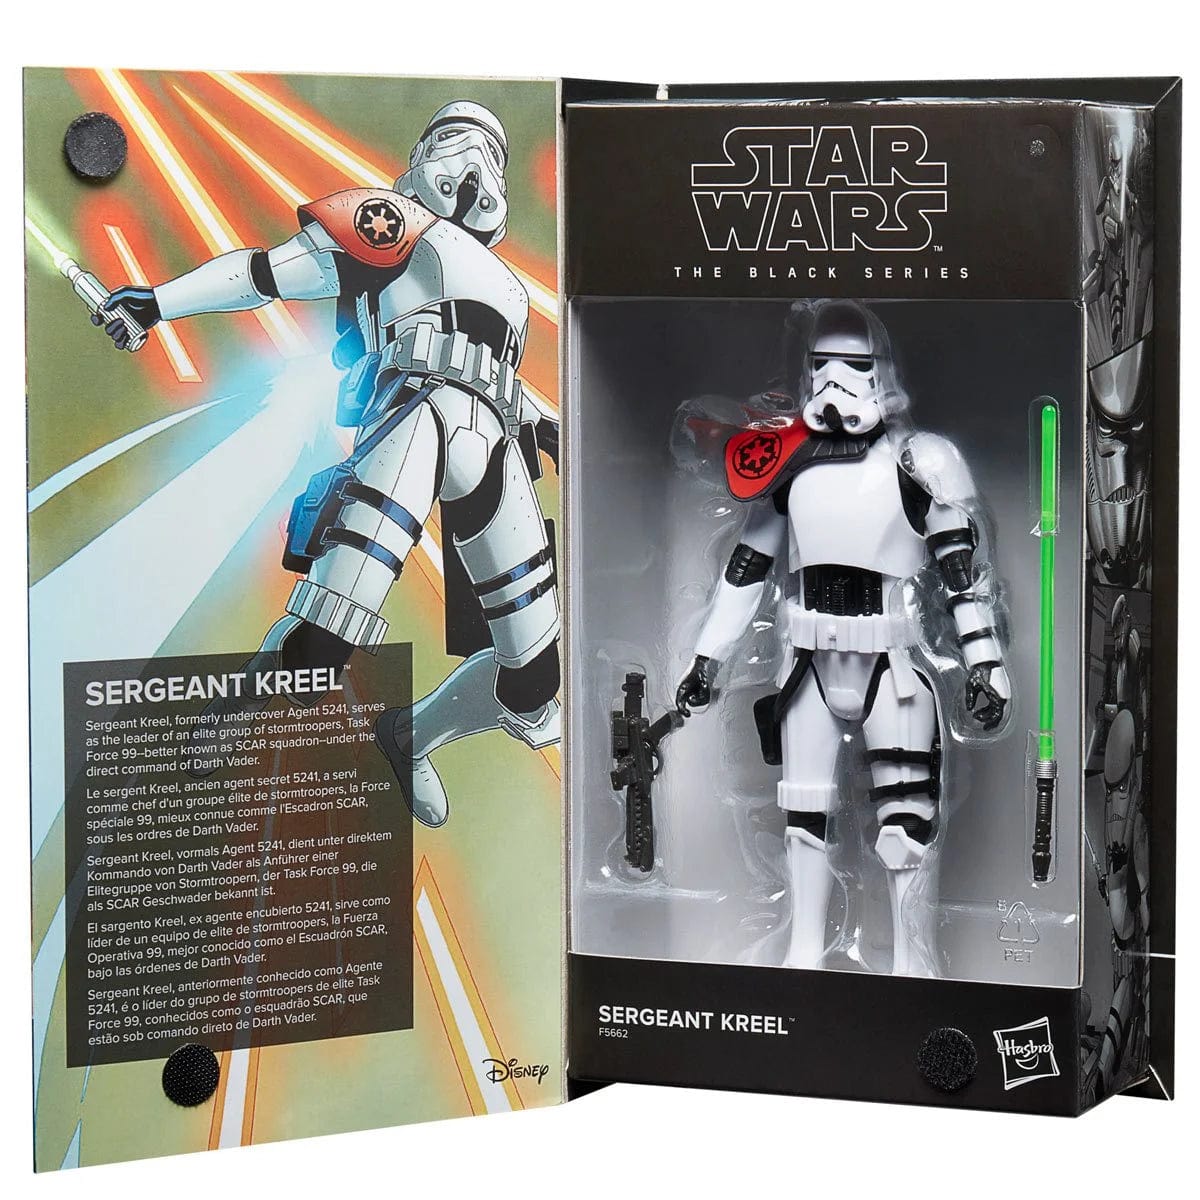 Star Wars The Black Series Sergeant Kreel 6-Inch Action Figure Packaging and artwork